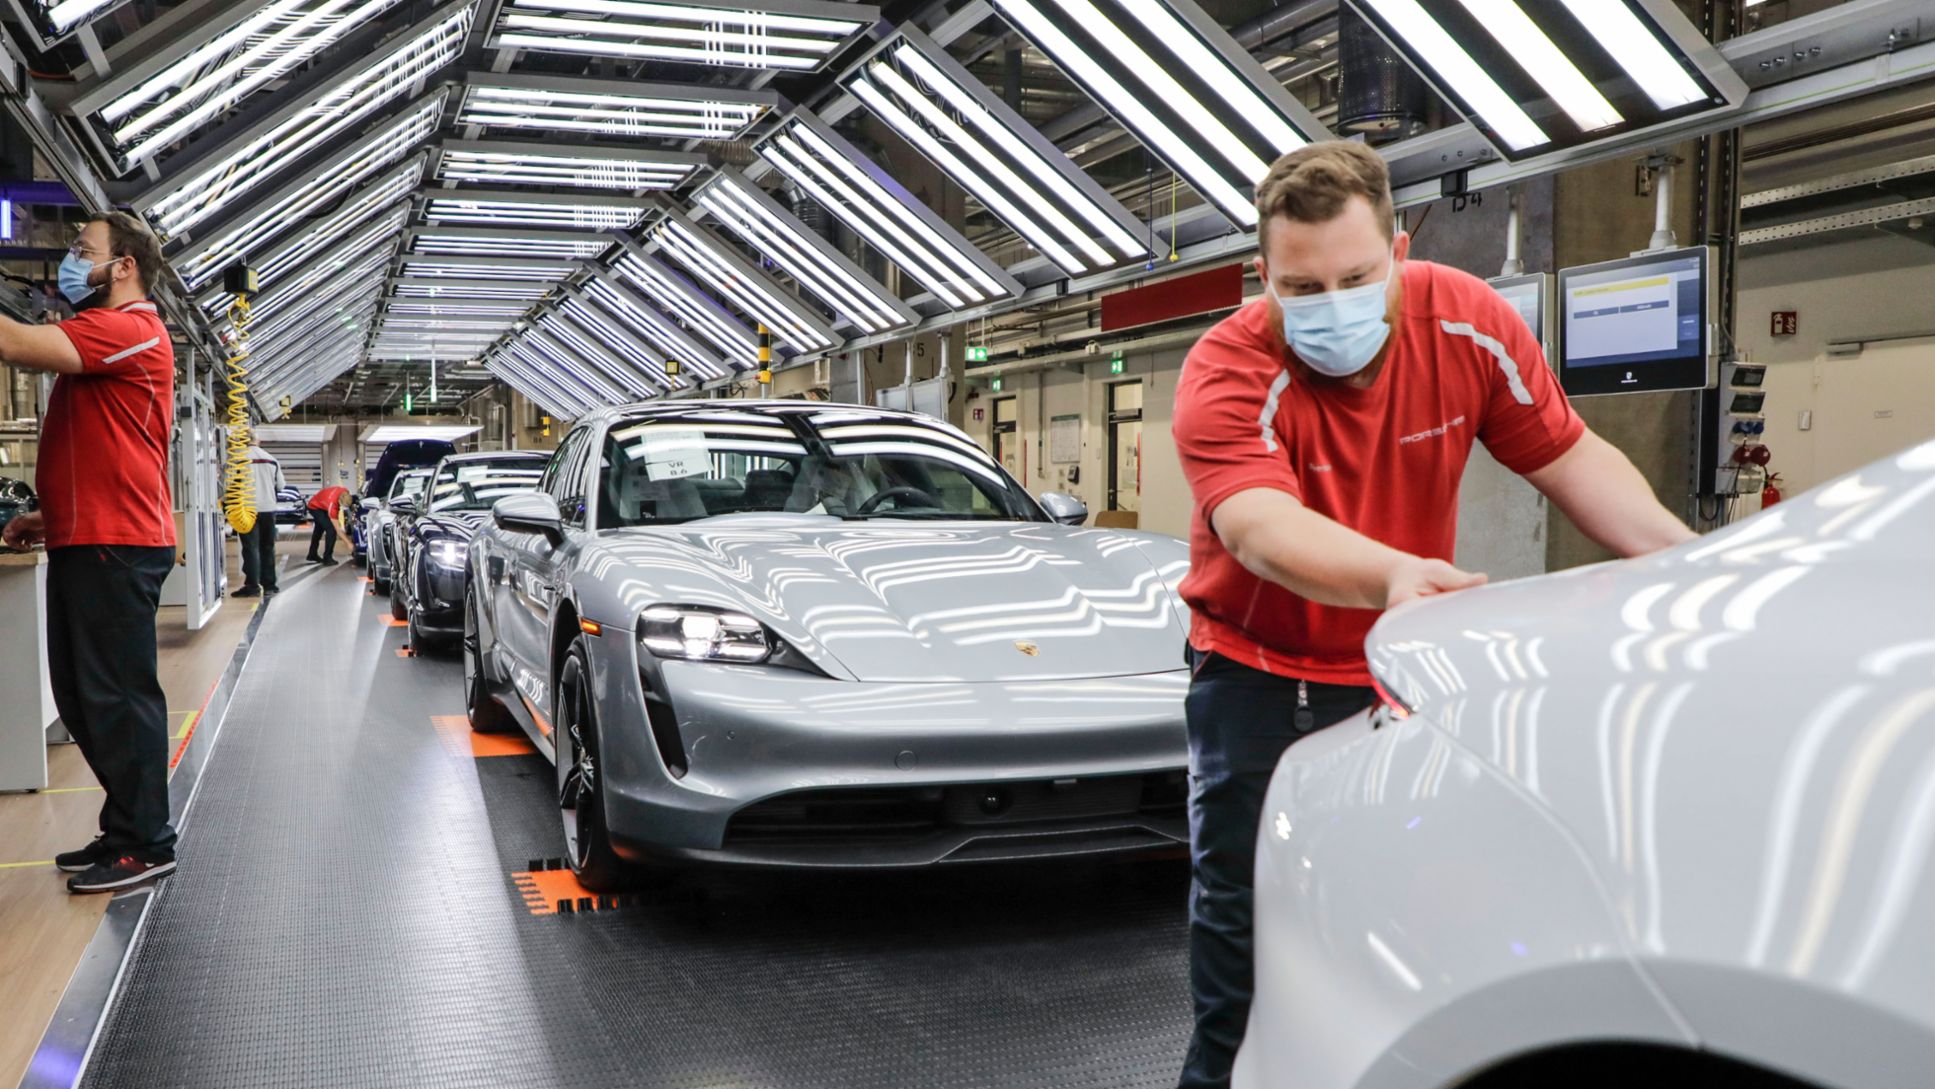 Porsche is manufacturing sports cars again - Porsche Newsroom